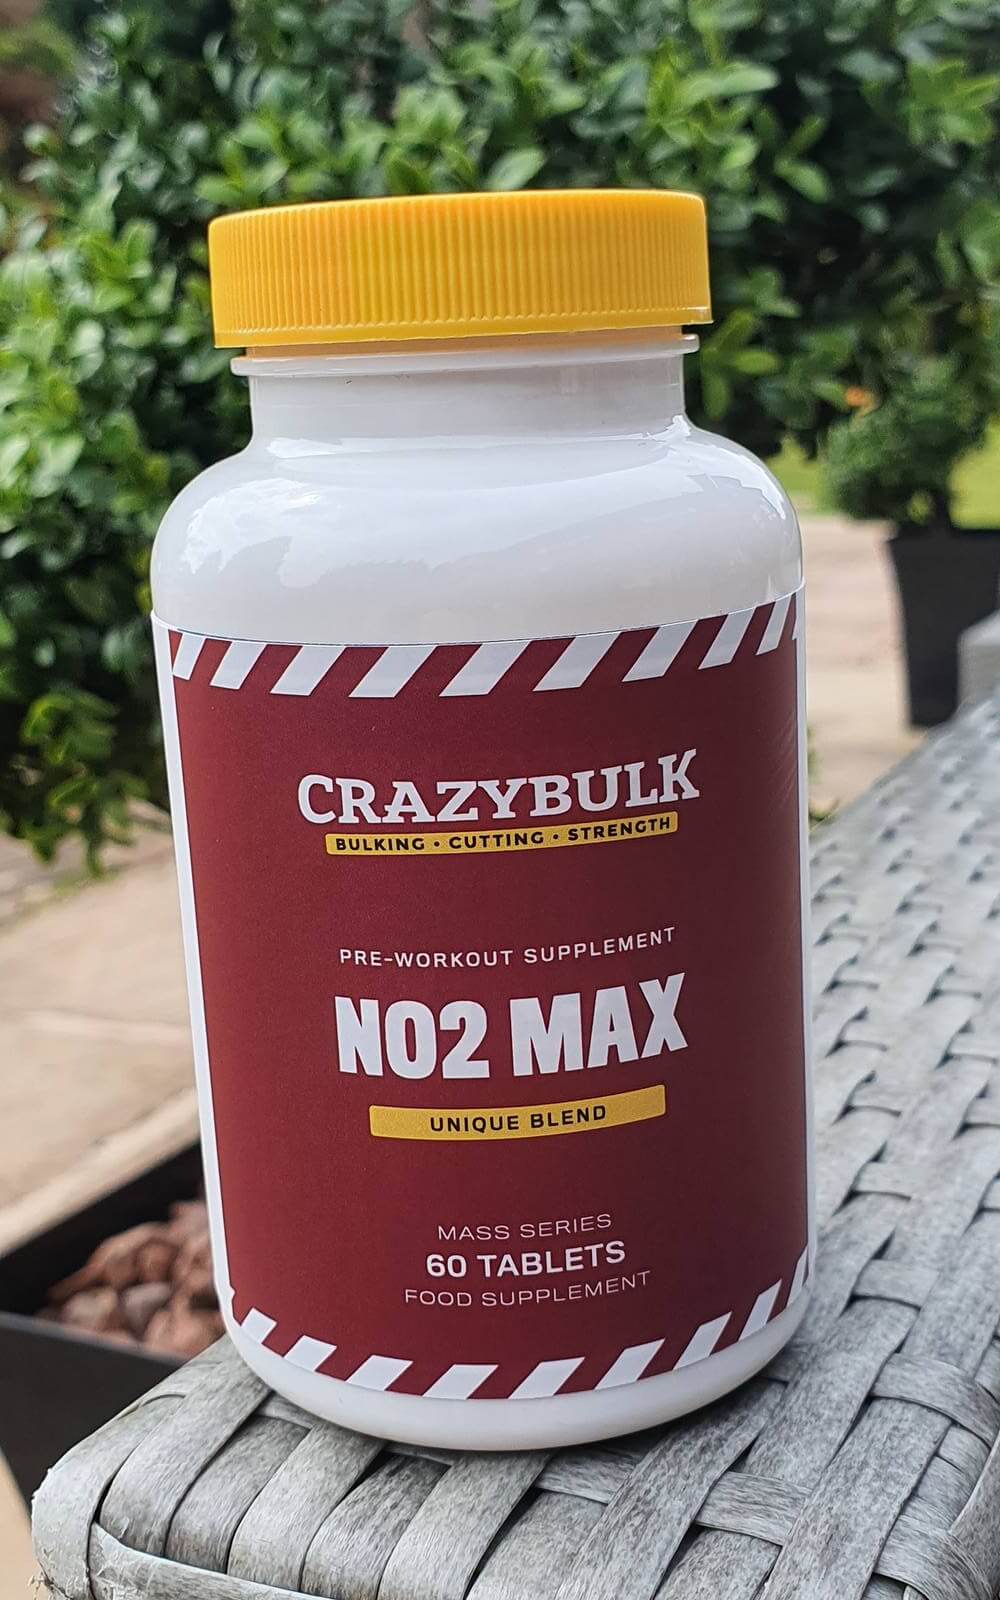 no2 max crazy bulk